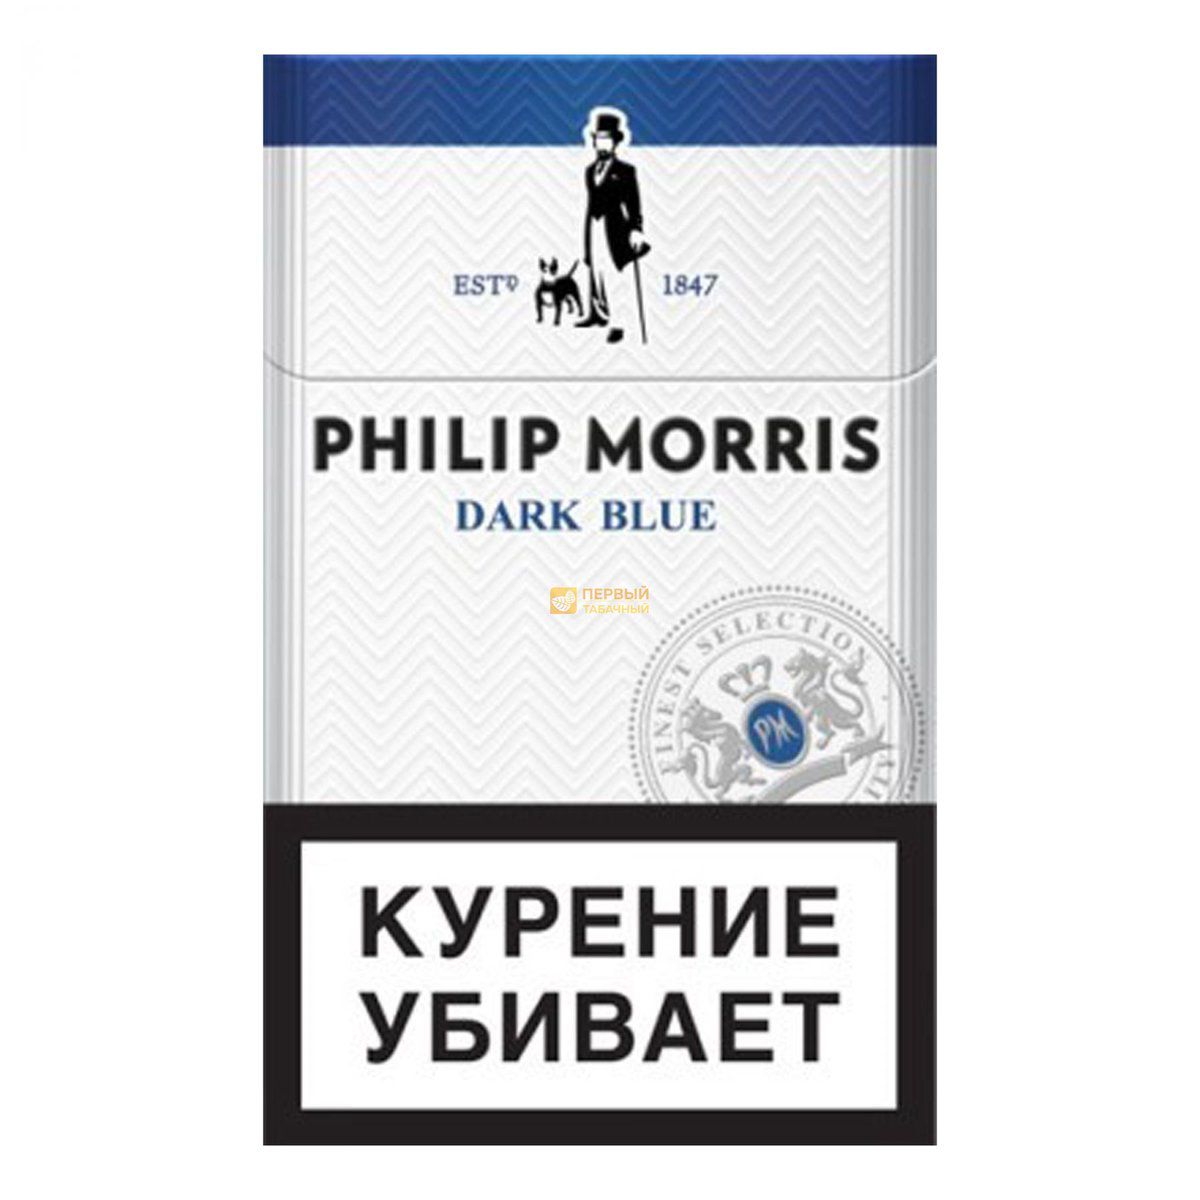 Филип моррис компакт. Сигареты Philip Morris Dark Blue. Филлип Моррис компакт премиум. Филип Морис компакт Блю.